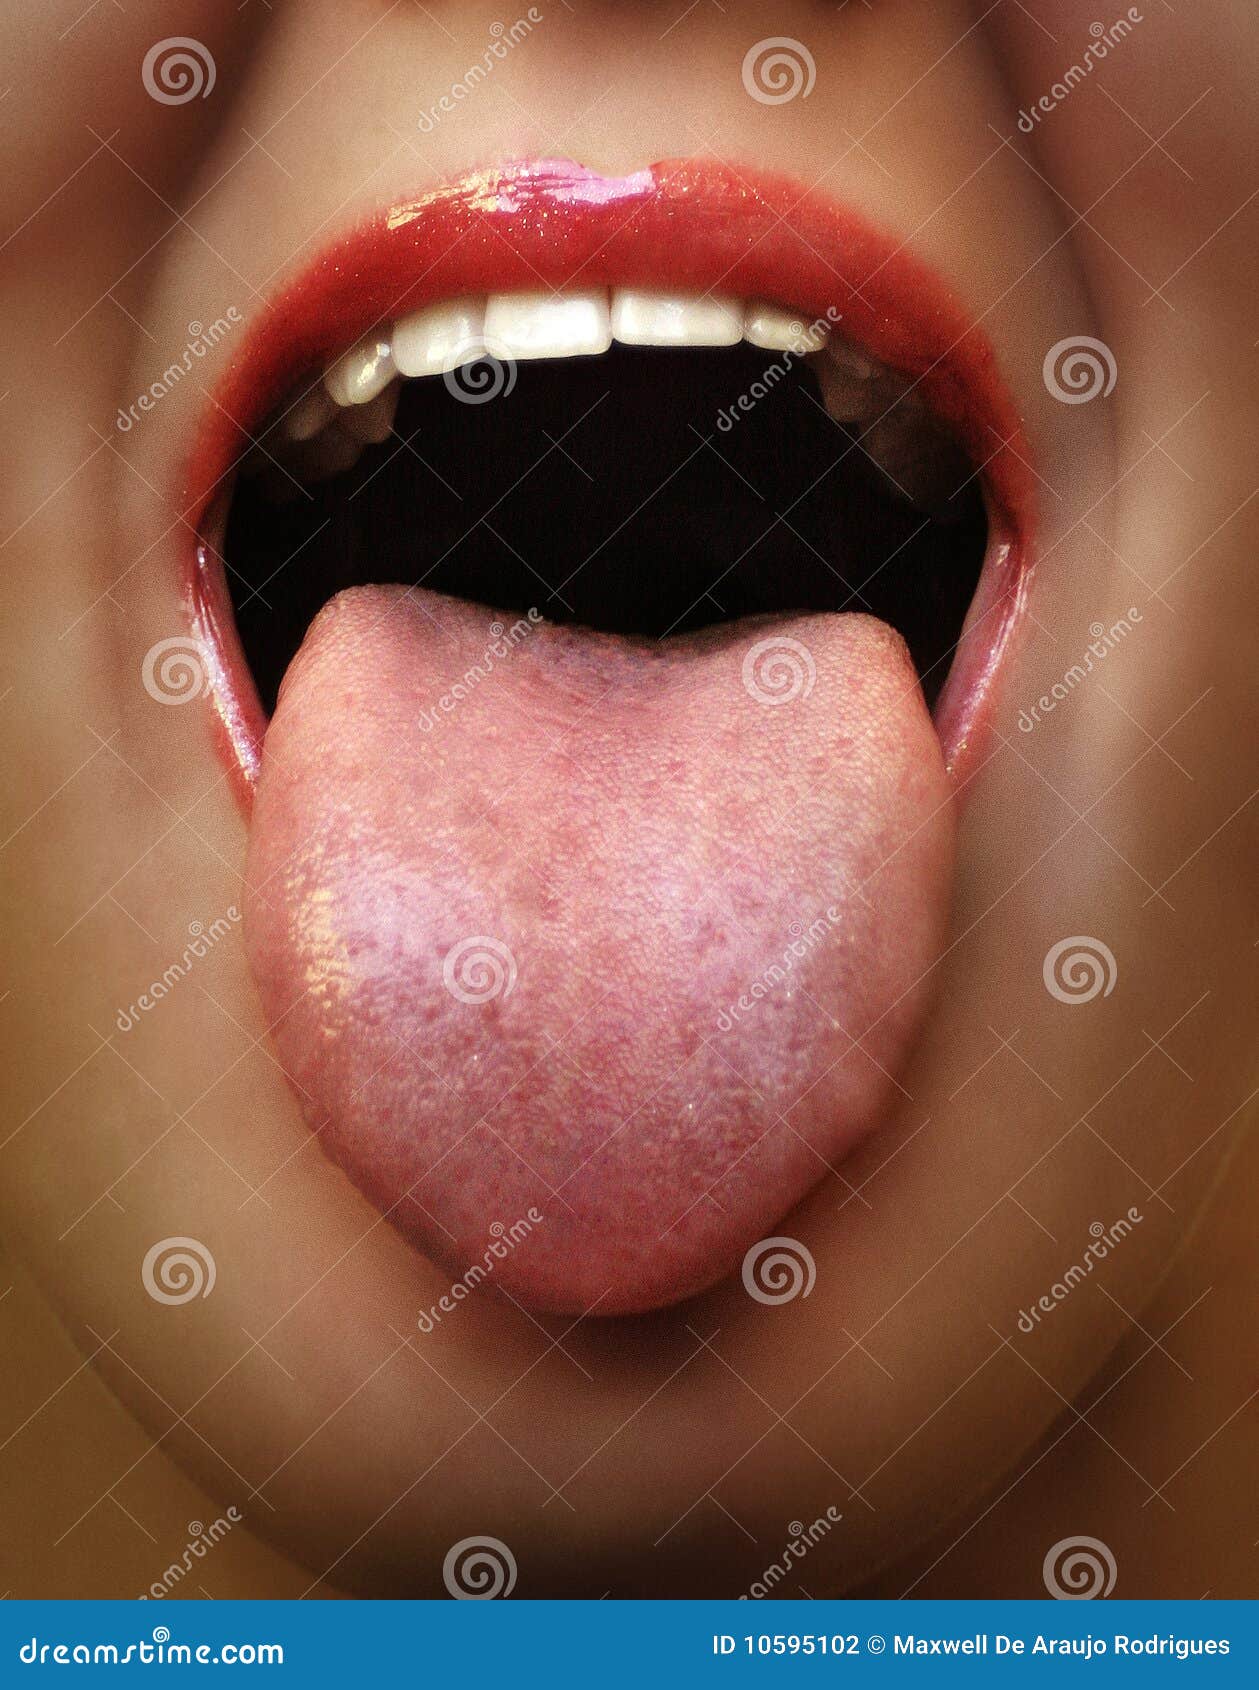 rebel tongue